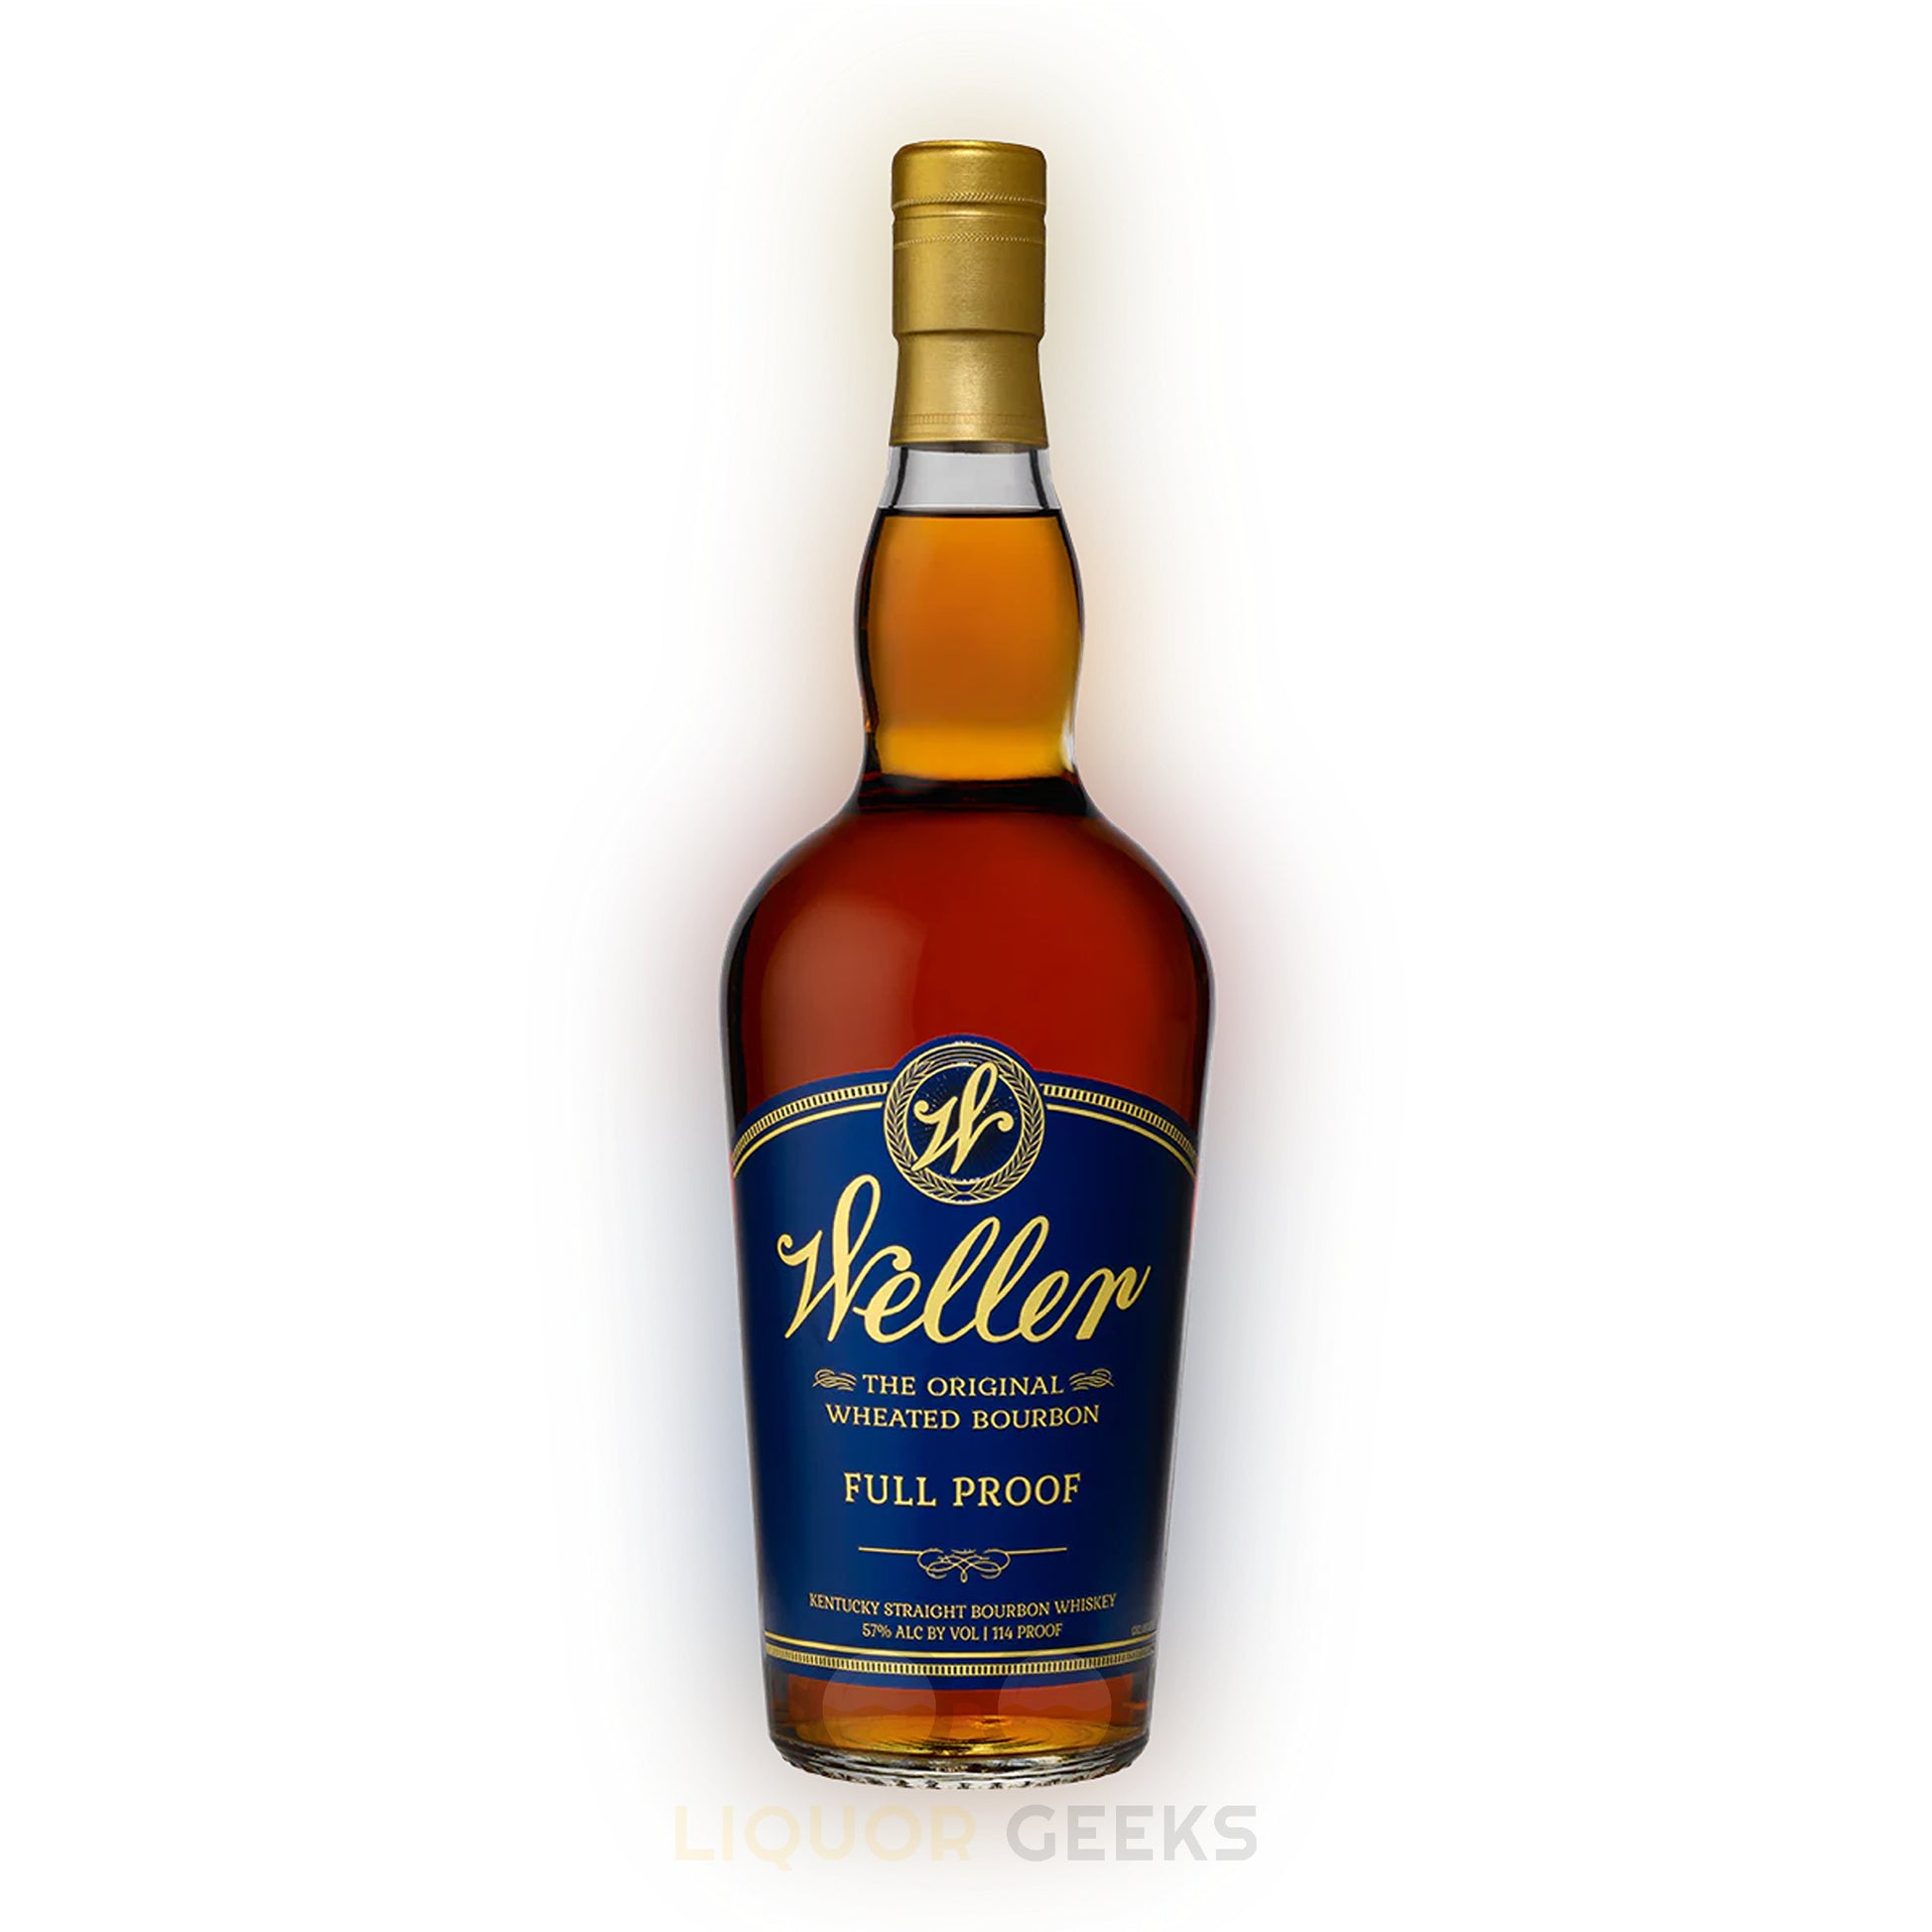 Weller Full Proof Wheated Bourbon - Liquor Geeks